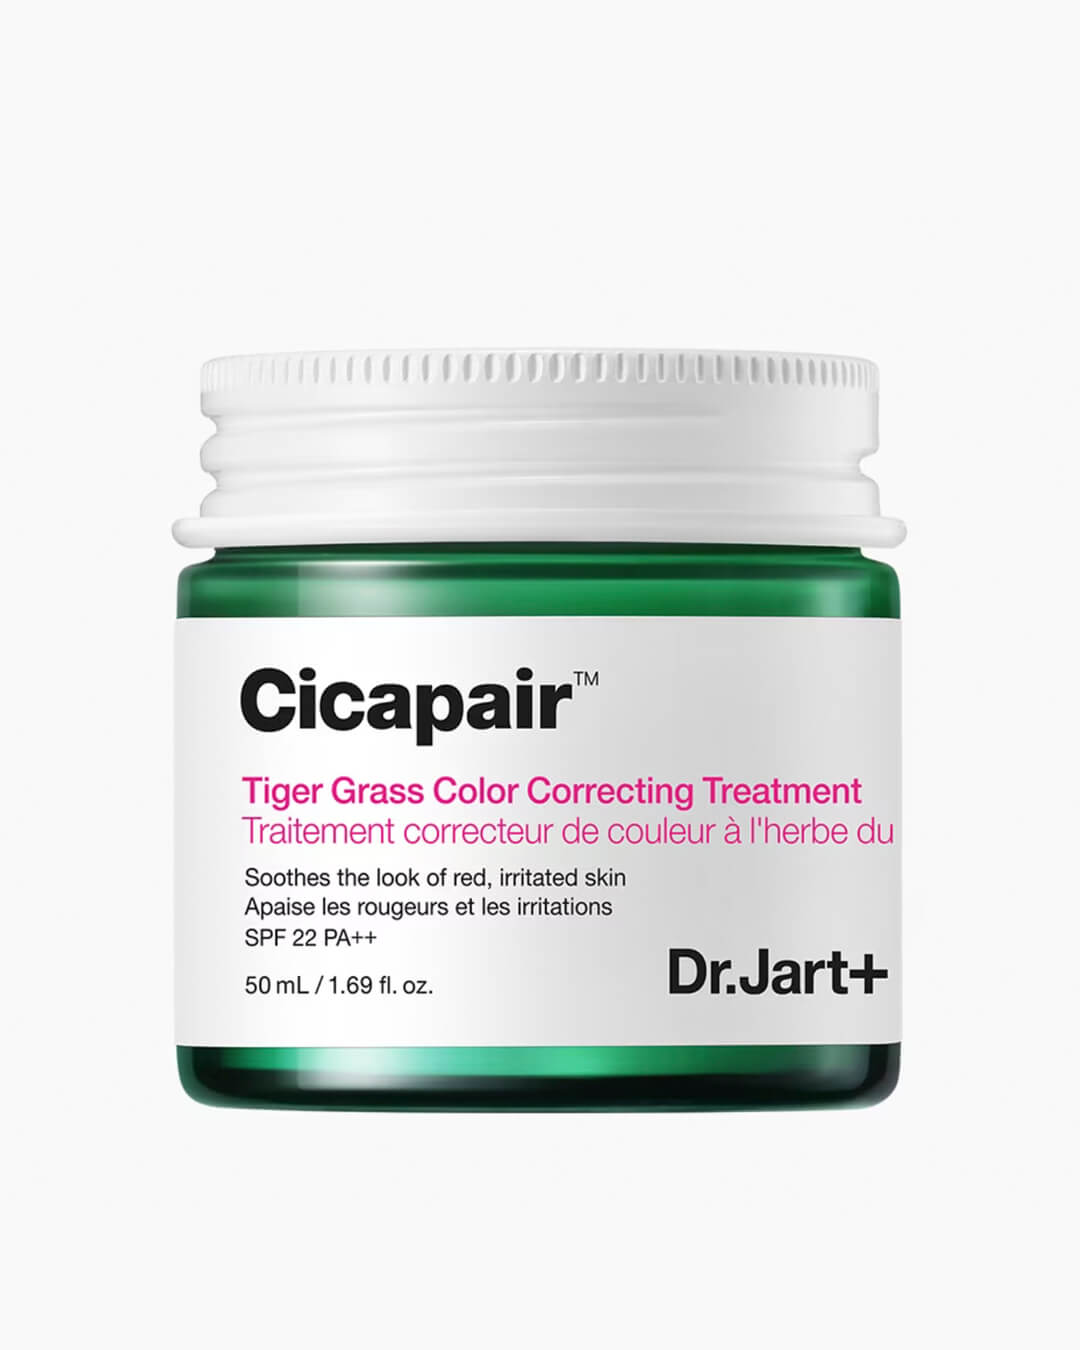 Ohlolly Korean Skincare Dr. Jart+ Tiger Grass Color Correcting Treatment